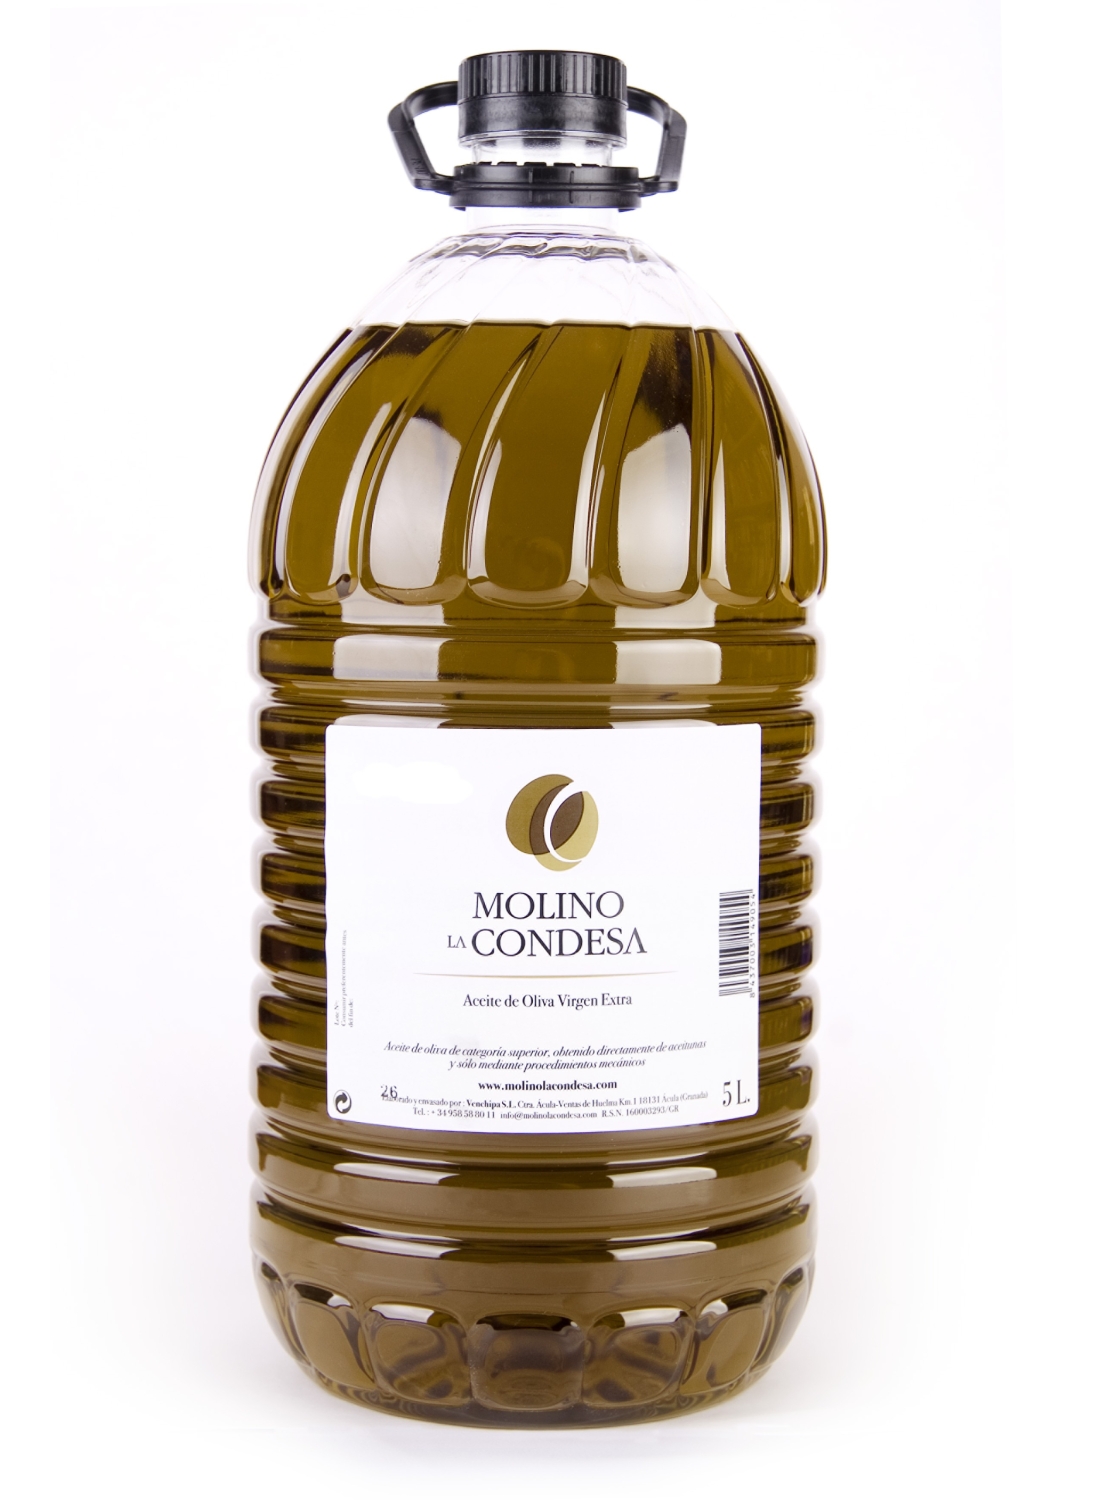 JAOlive 5 LITROS Aceite de oliva virgen extra 360º EXPERIENCE